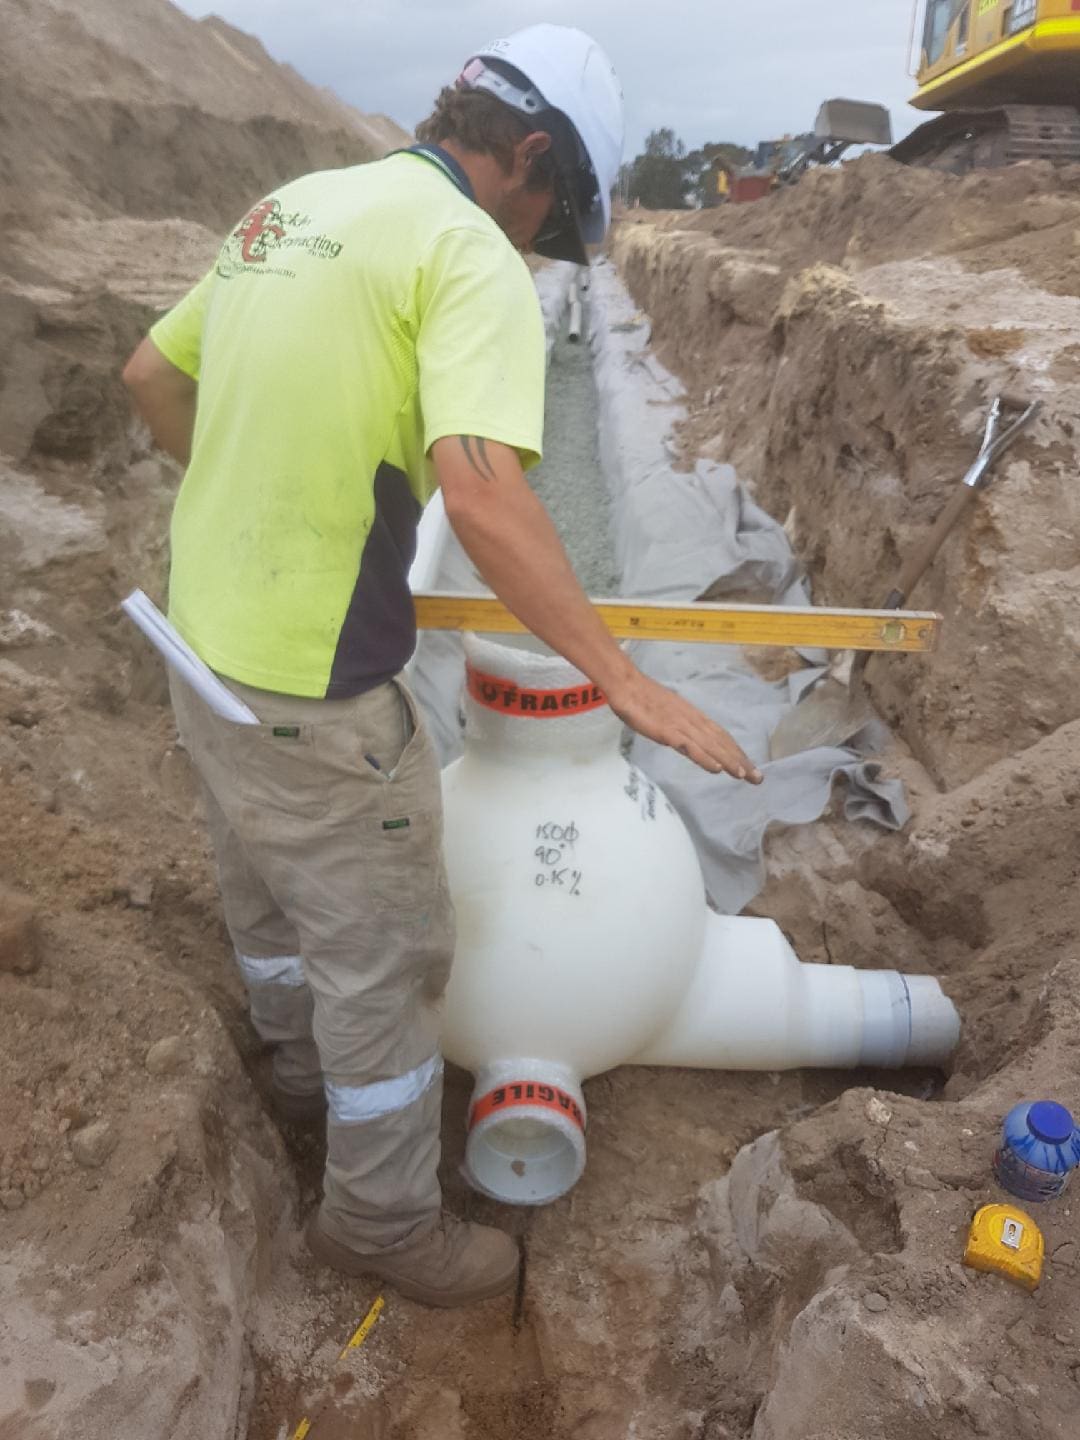 An engineer installing Poo Pit shaft for Sewerage management